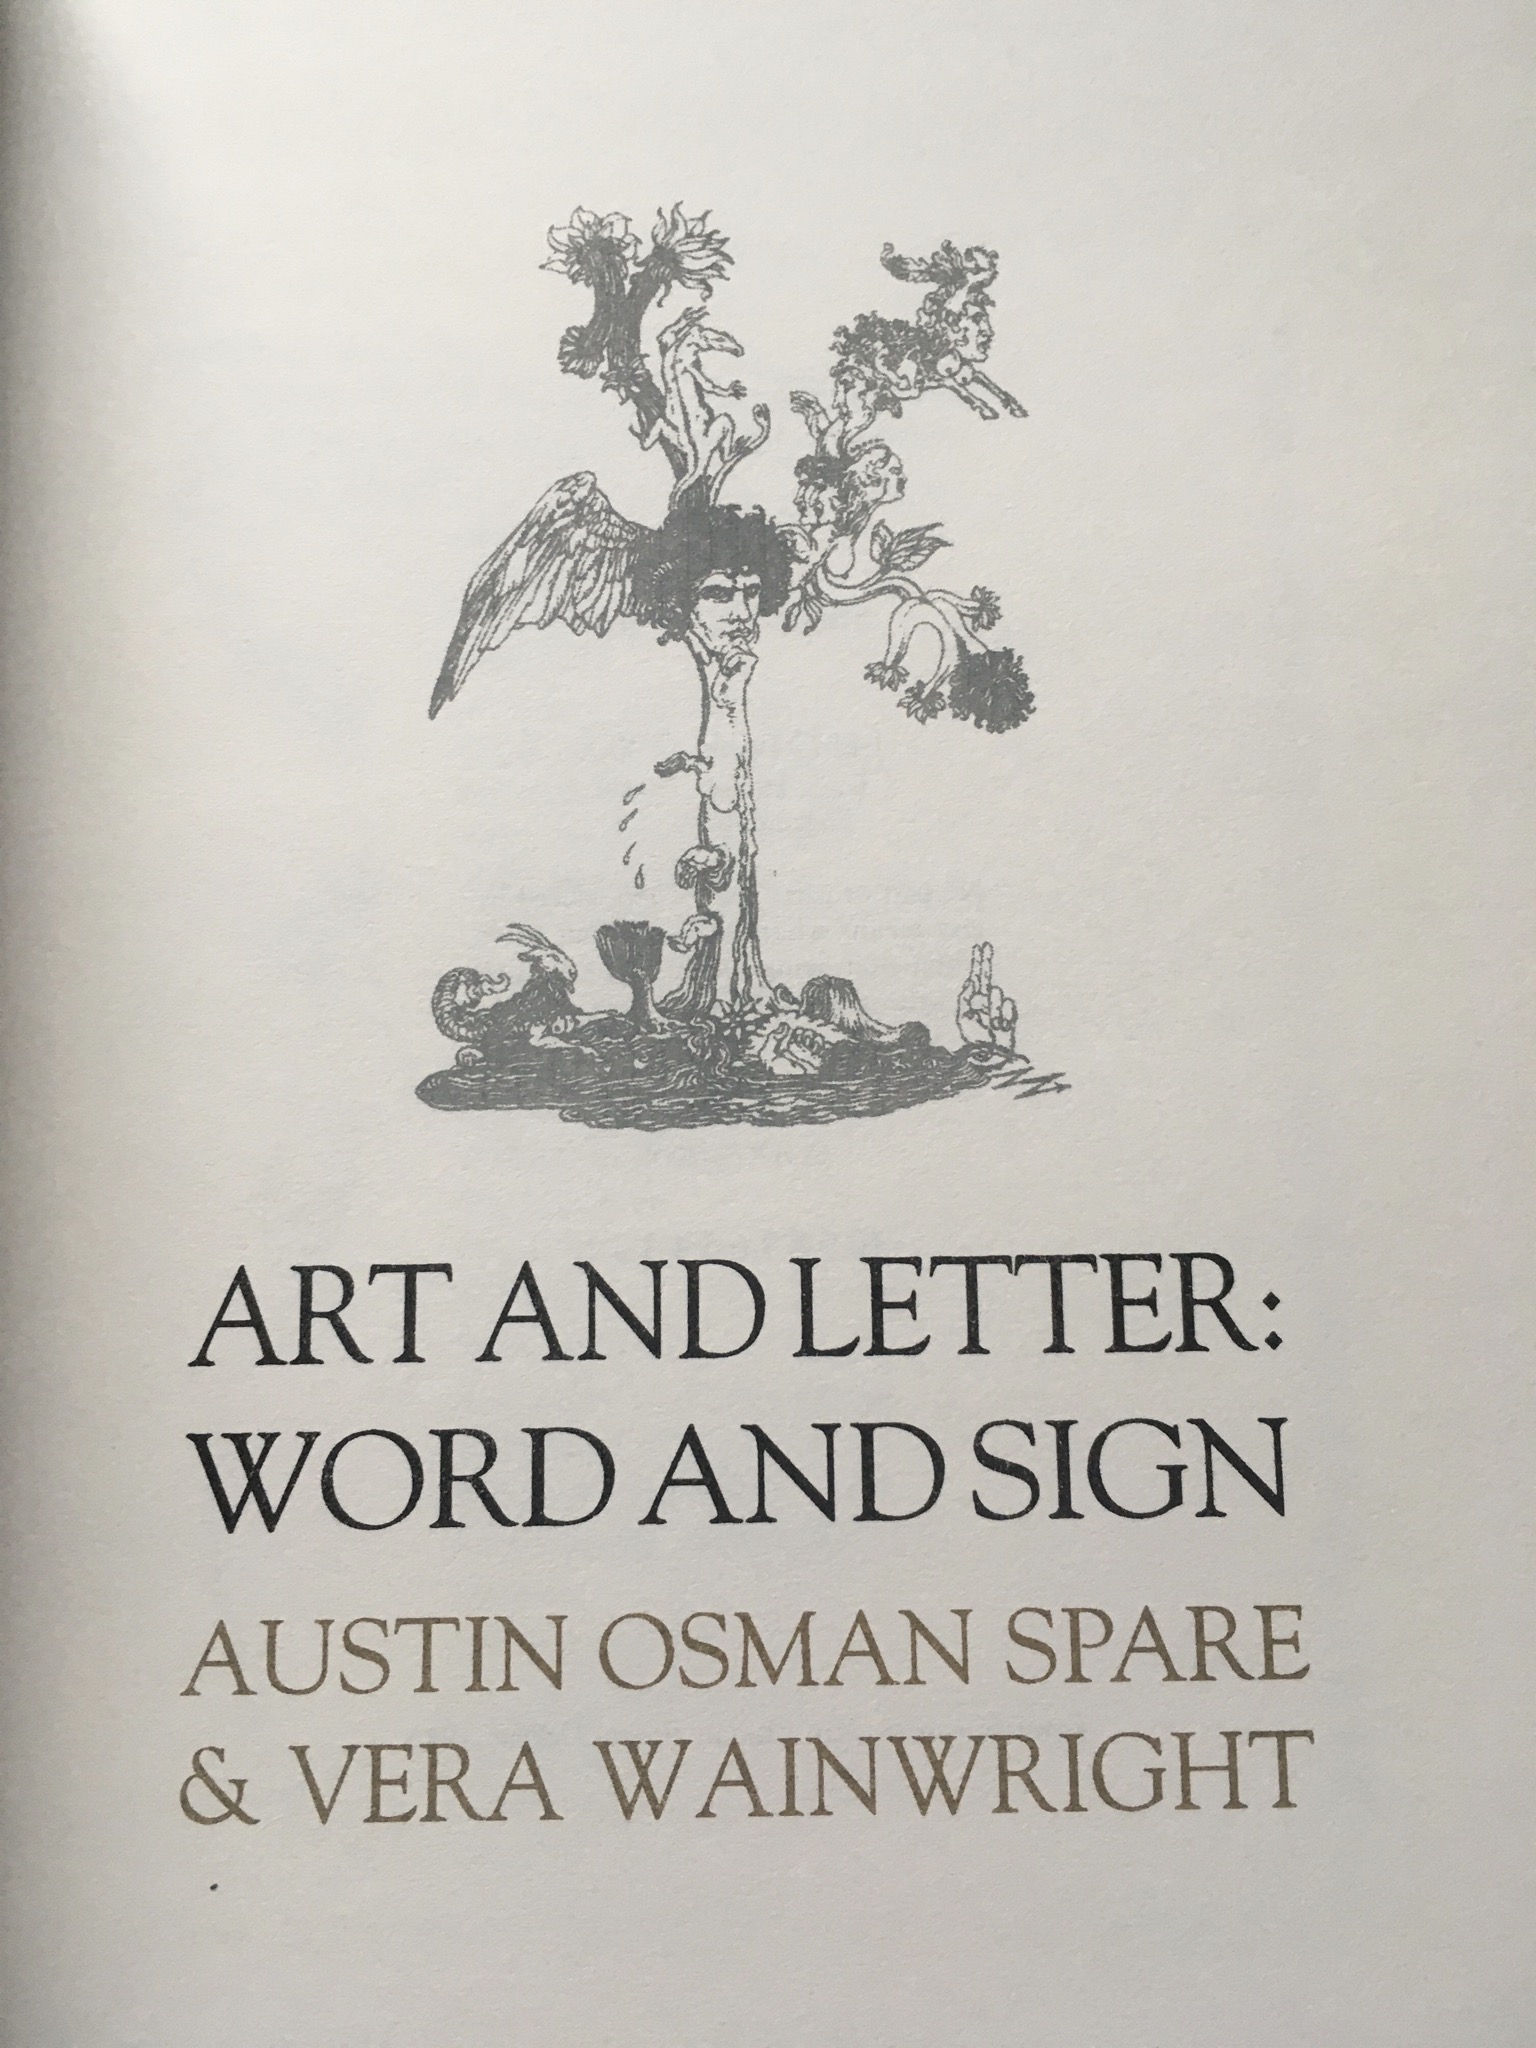 Austin Osman Spare Art & Letter, Vera Wainwright Word & Sign